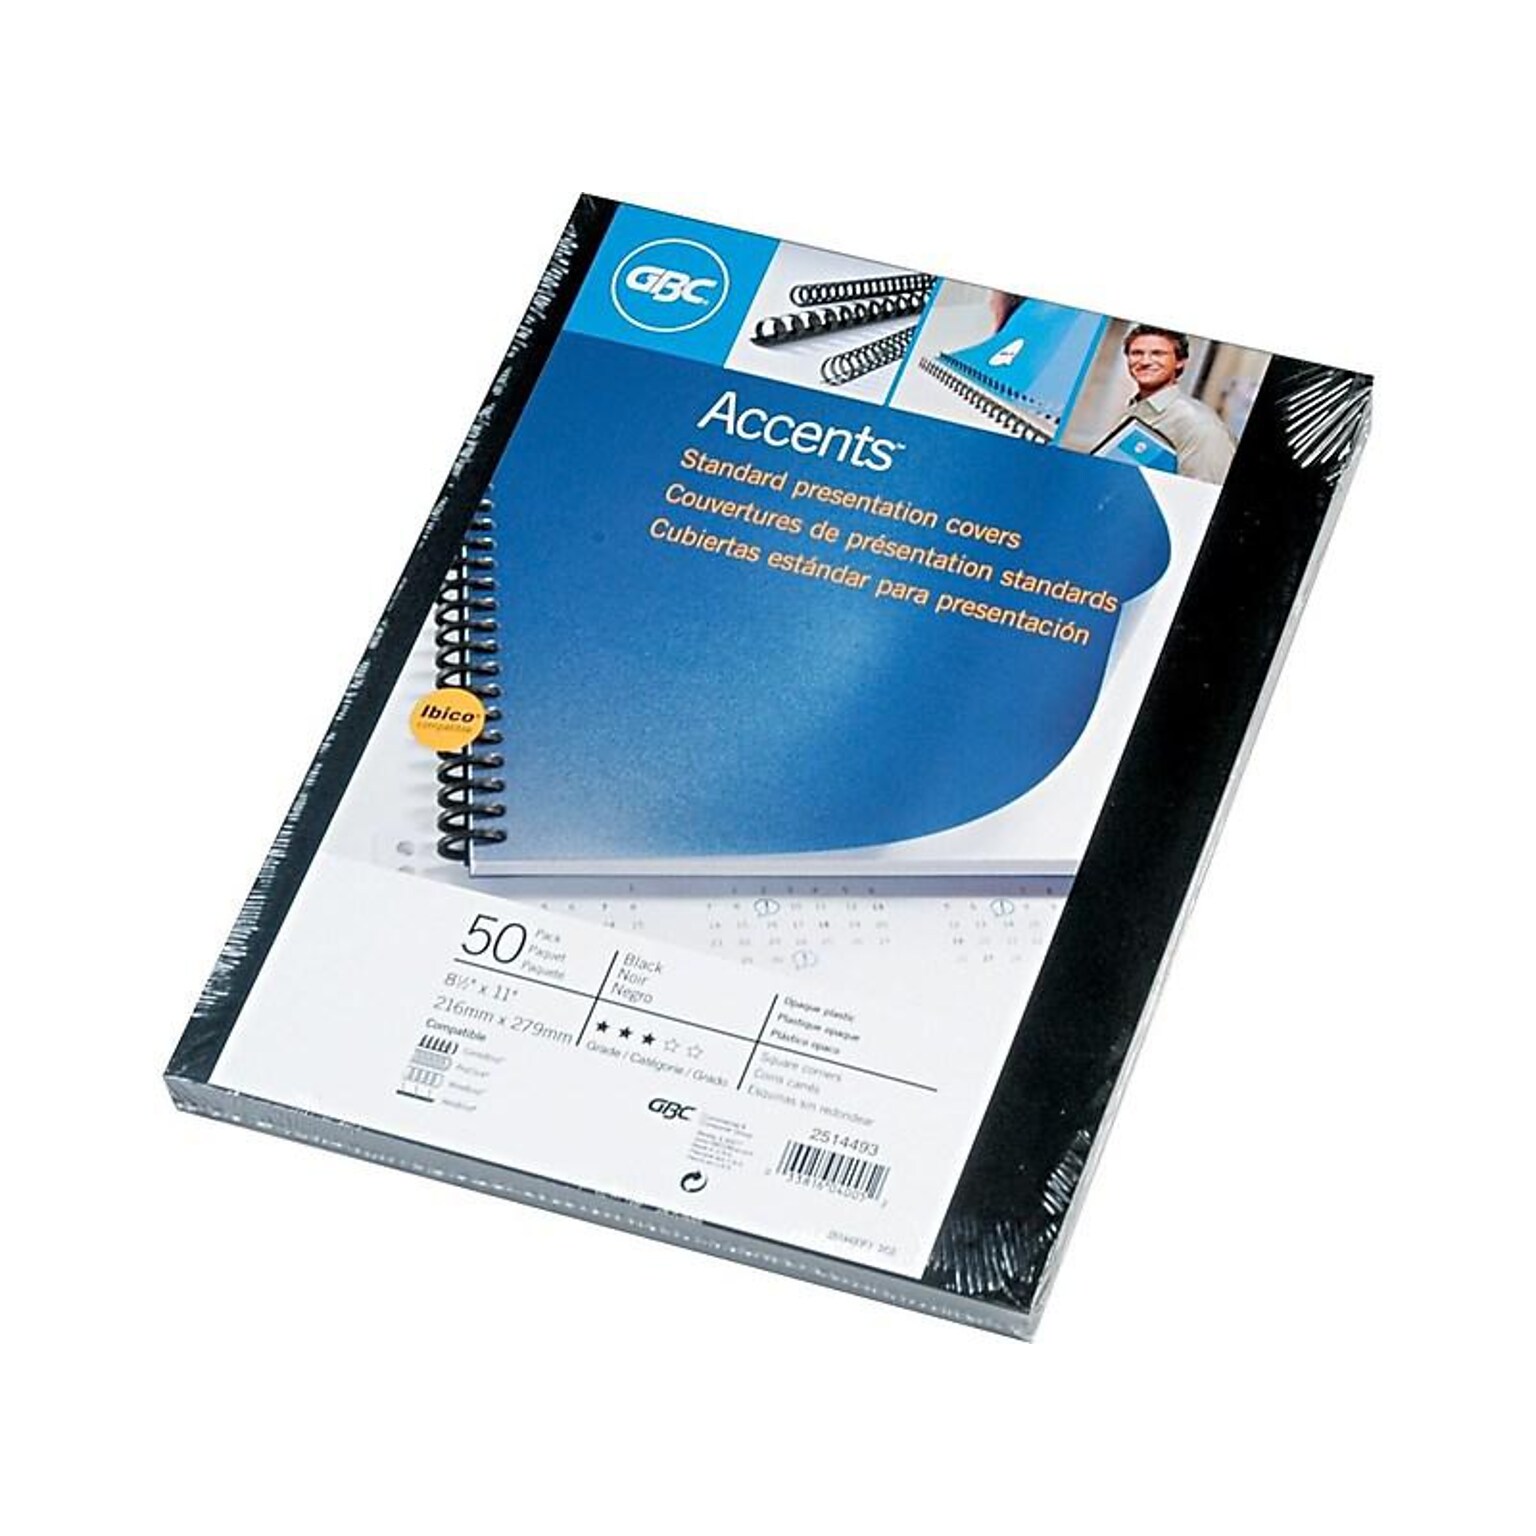 Swingline GBC Solids Standard Presentation Covers Presentation Covers, 8.5W x 11H (US letter), Black, 50 Pack (2514493)